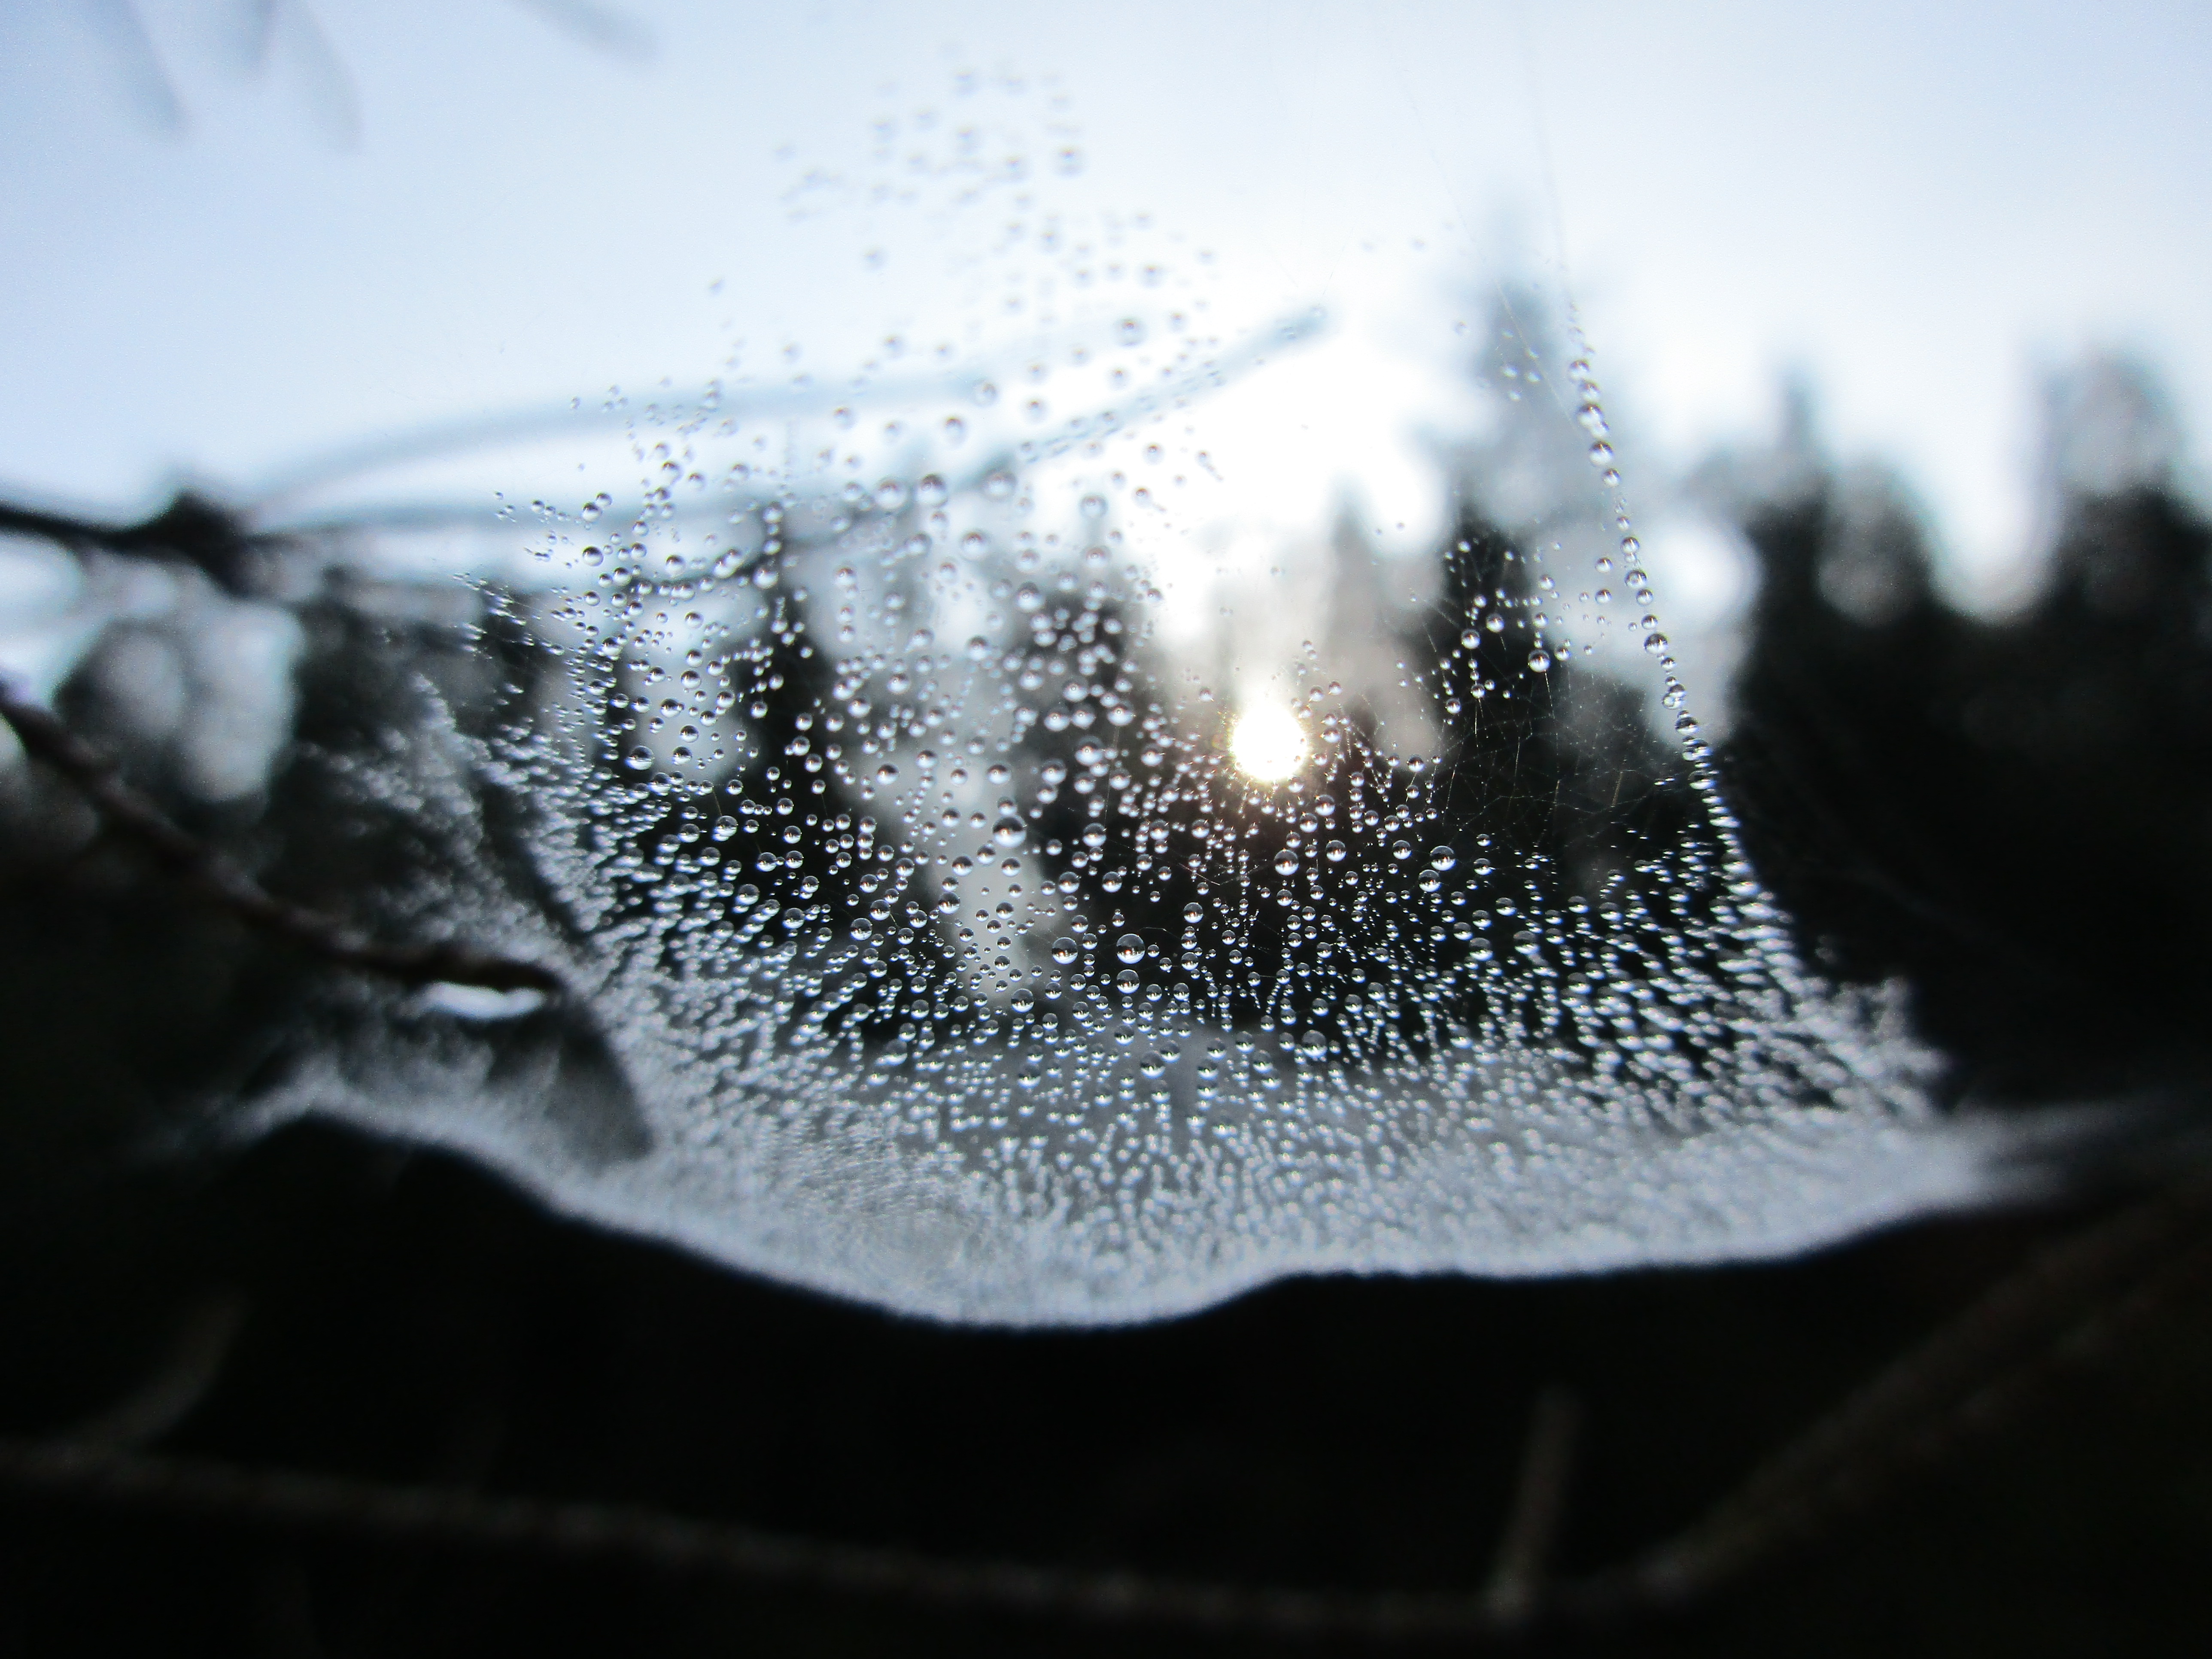 Spider Web Sunrise Water Drop 5152x3864